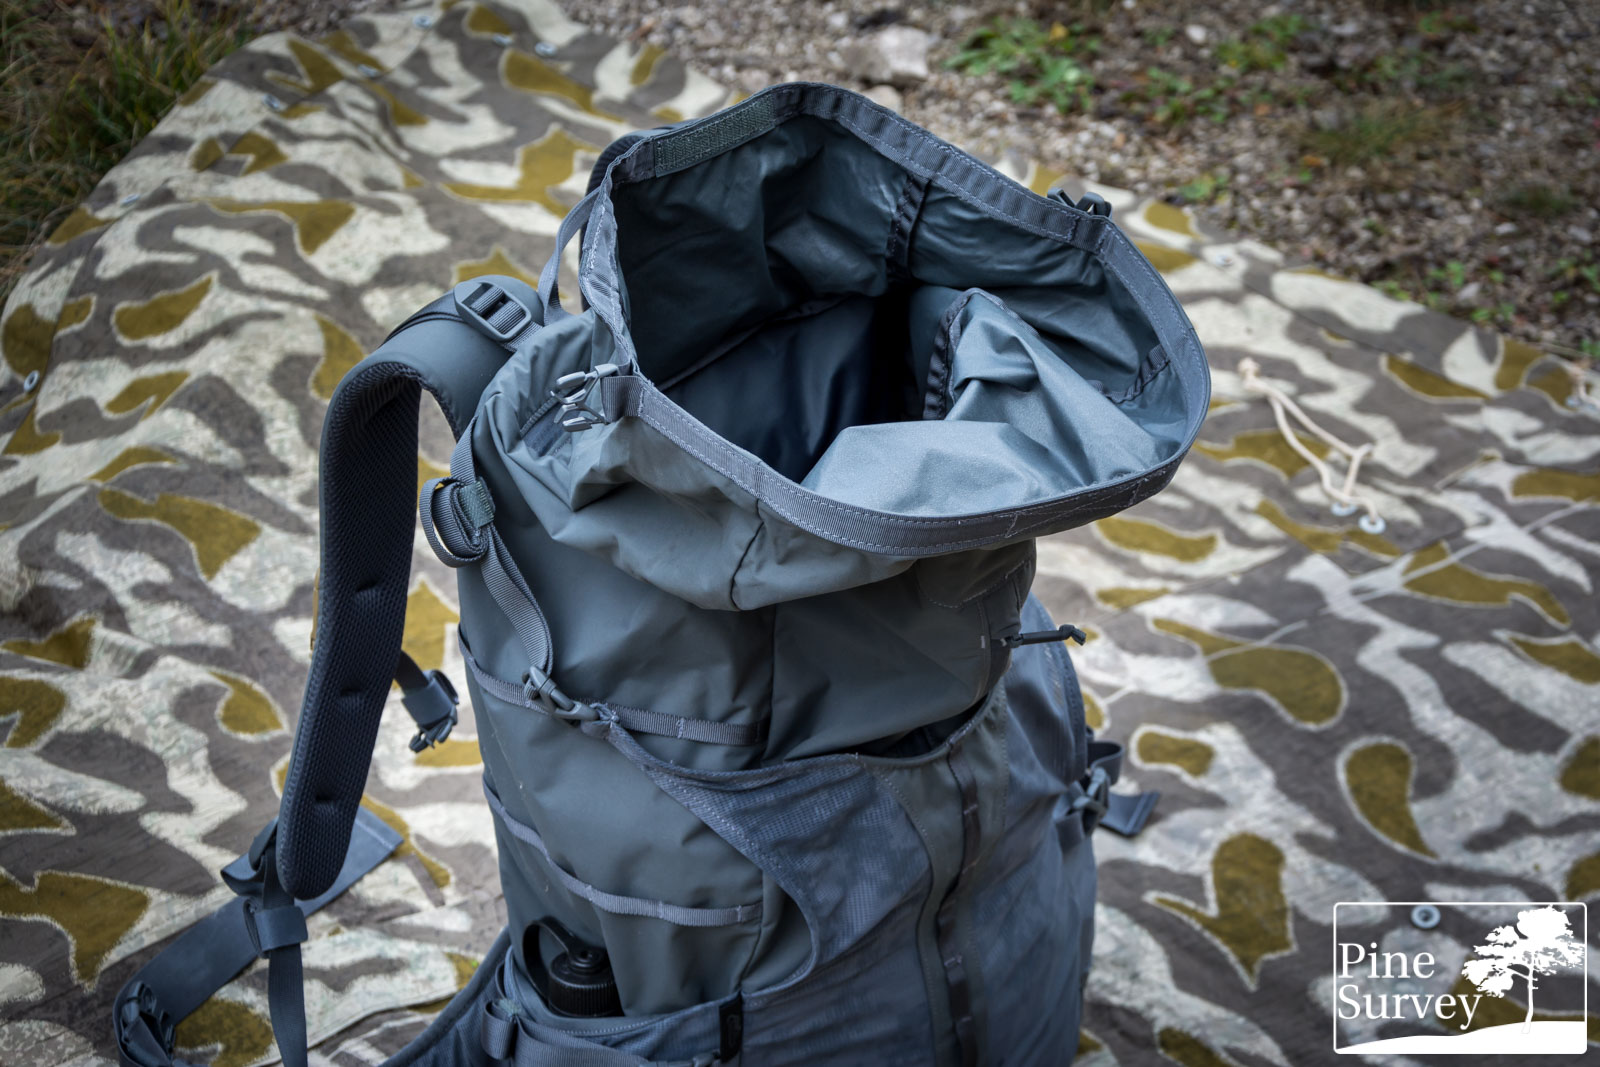 Mochila Summit Backpack® Helikon Tex